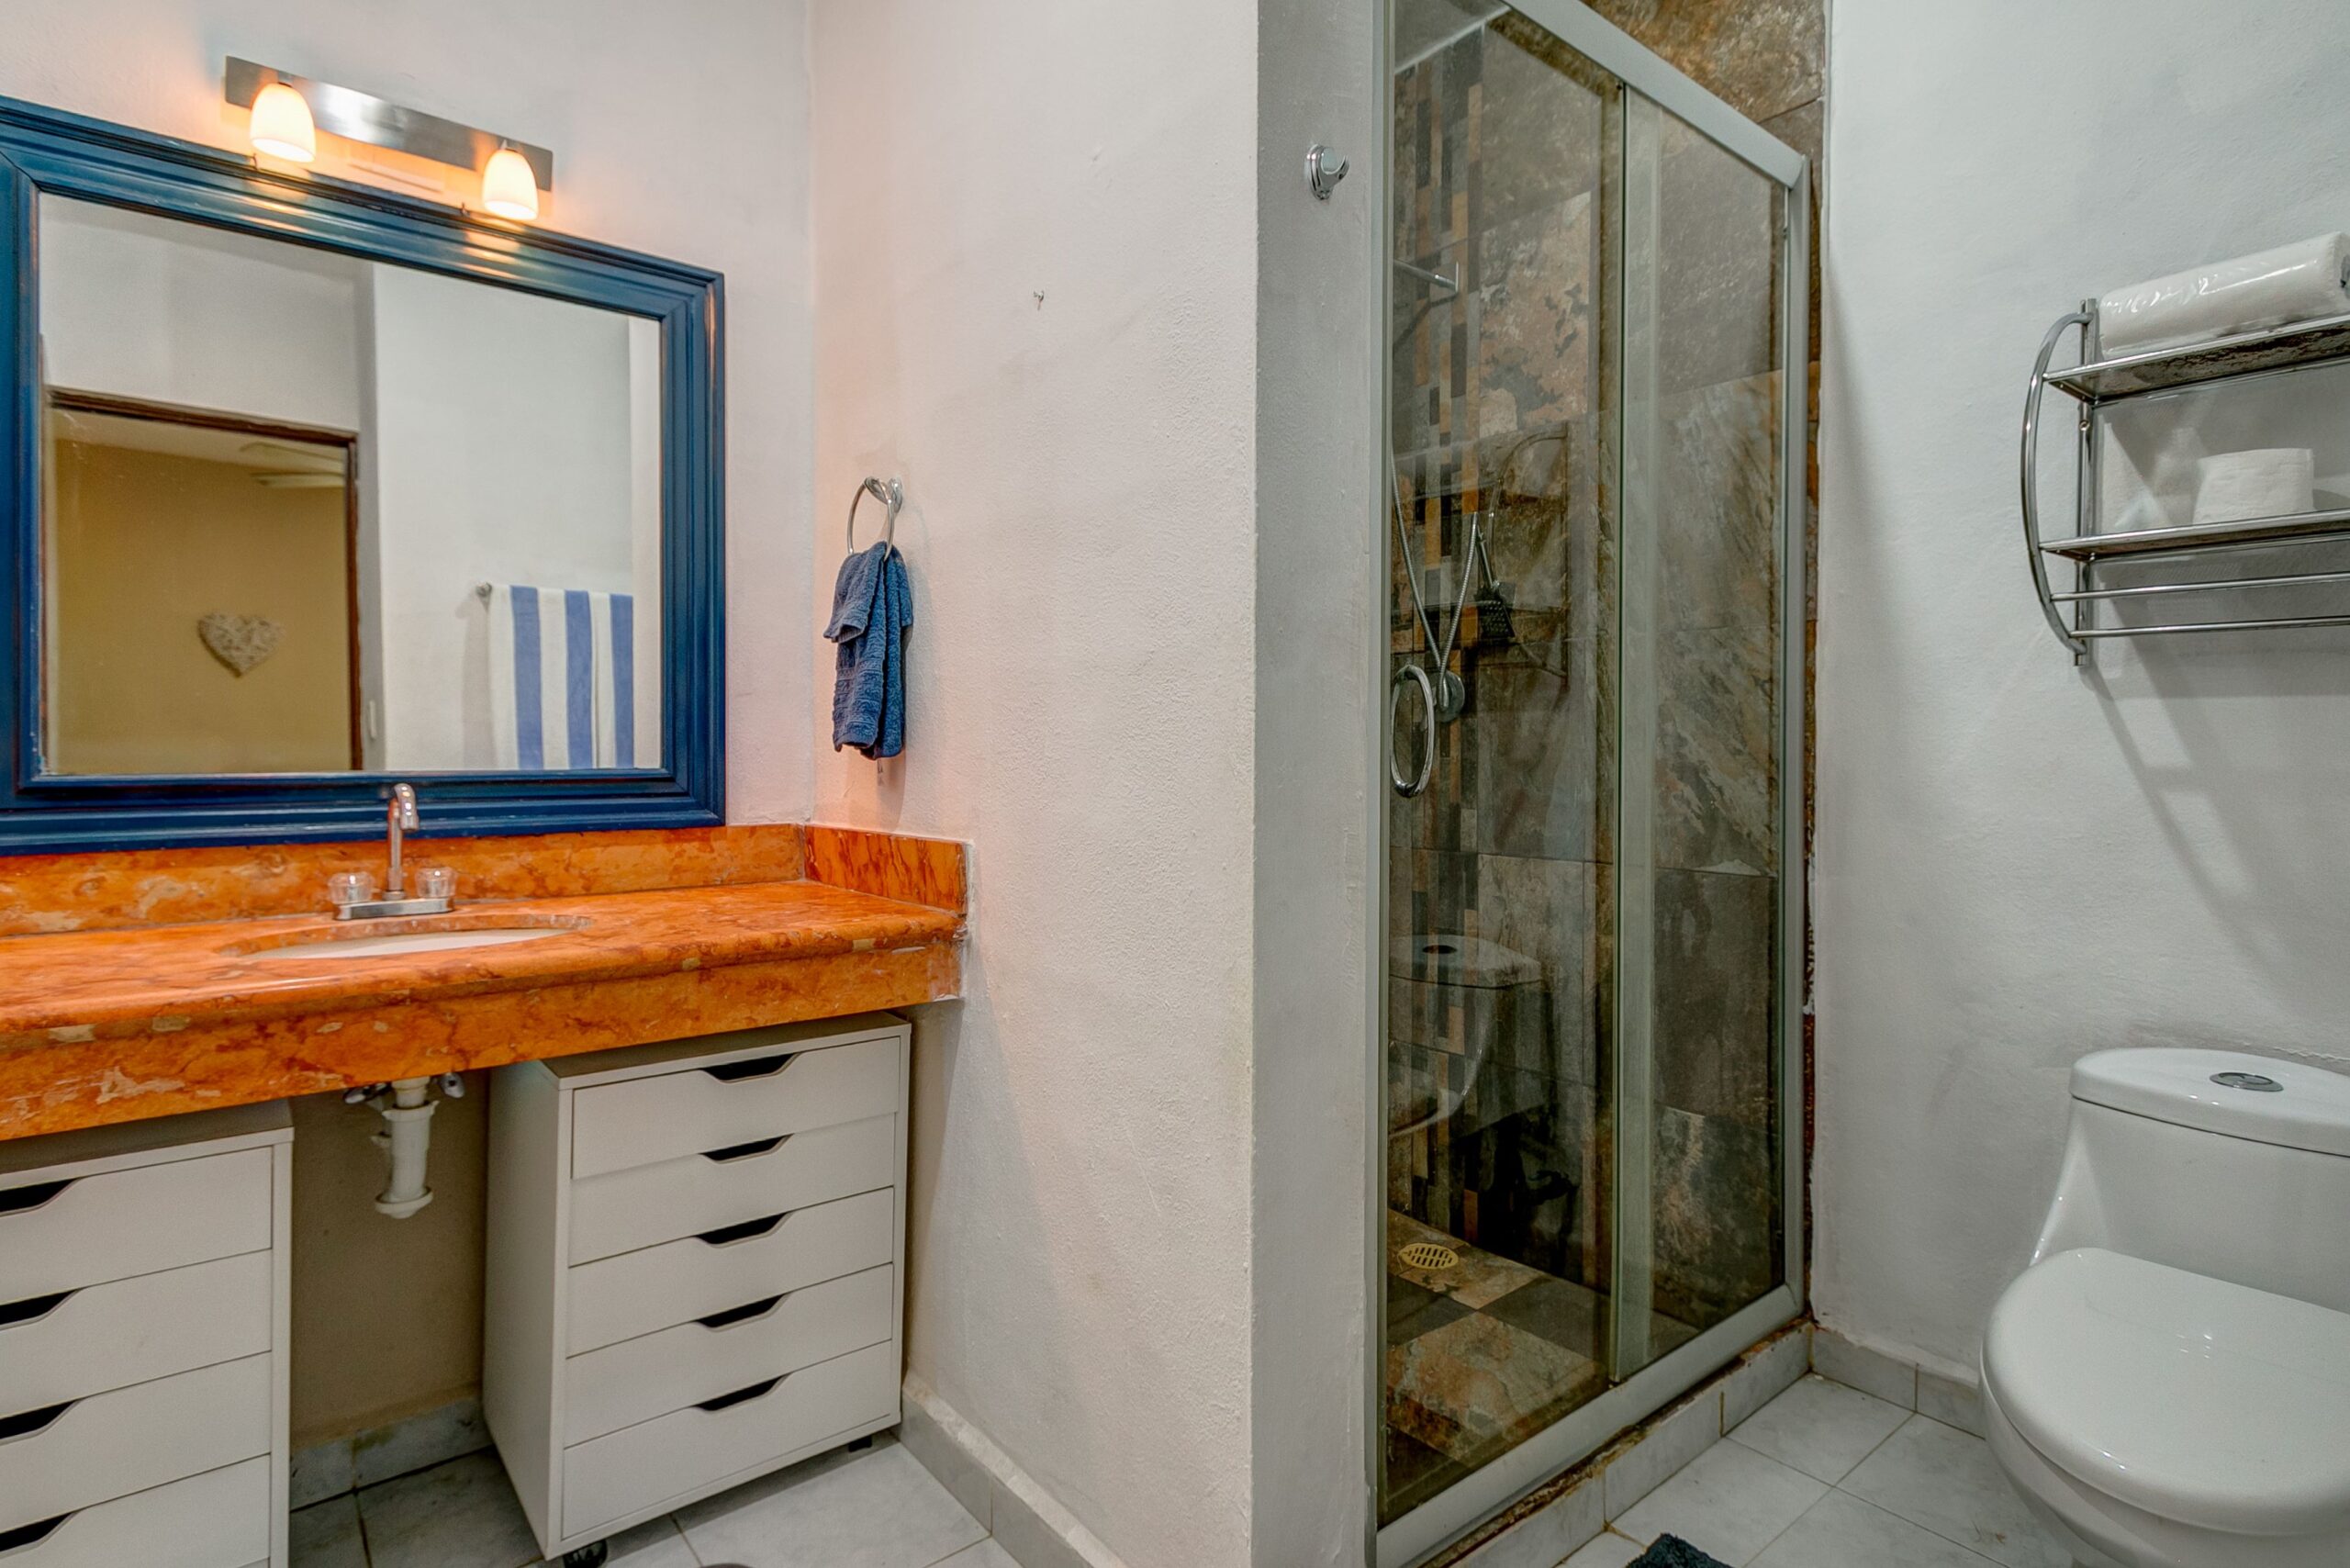 j apartment for sale in playacar gaviotas bathroom and shower